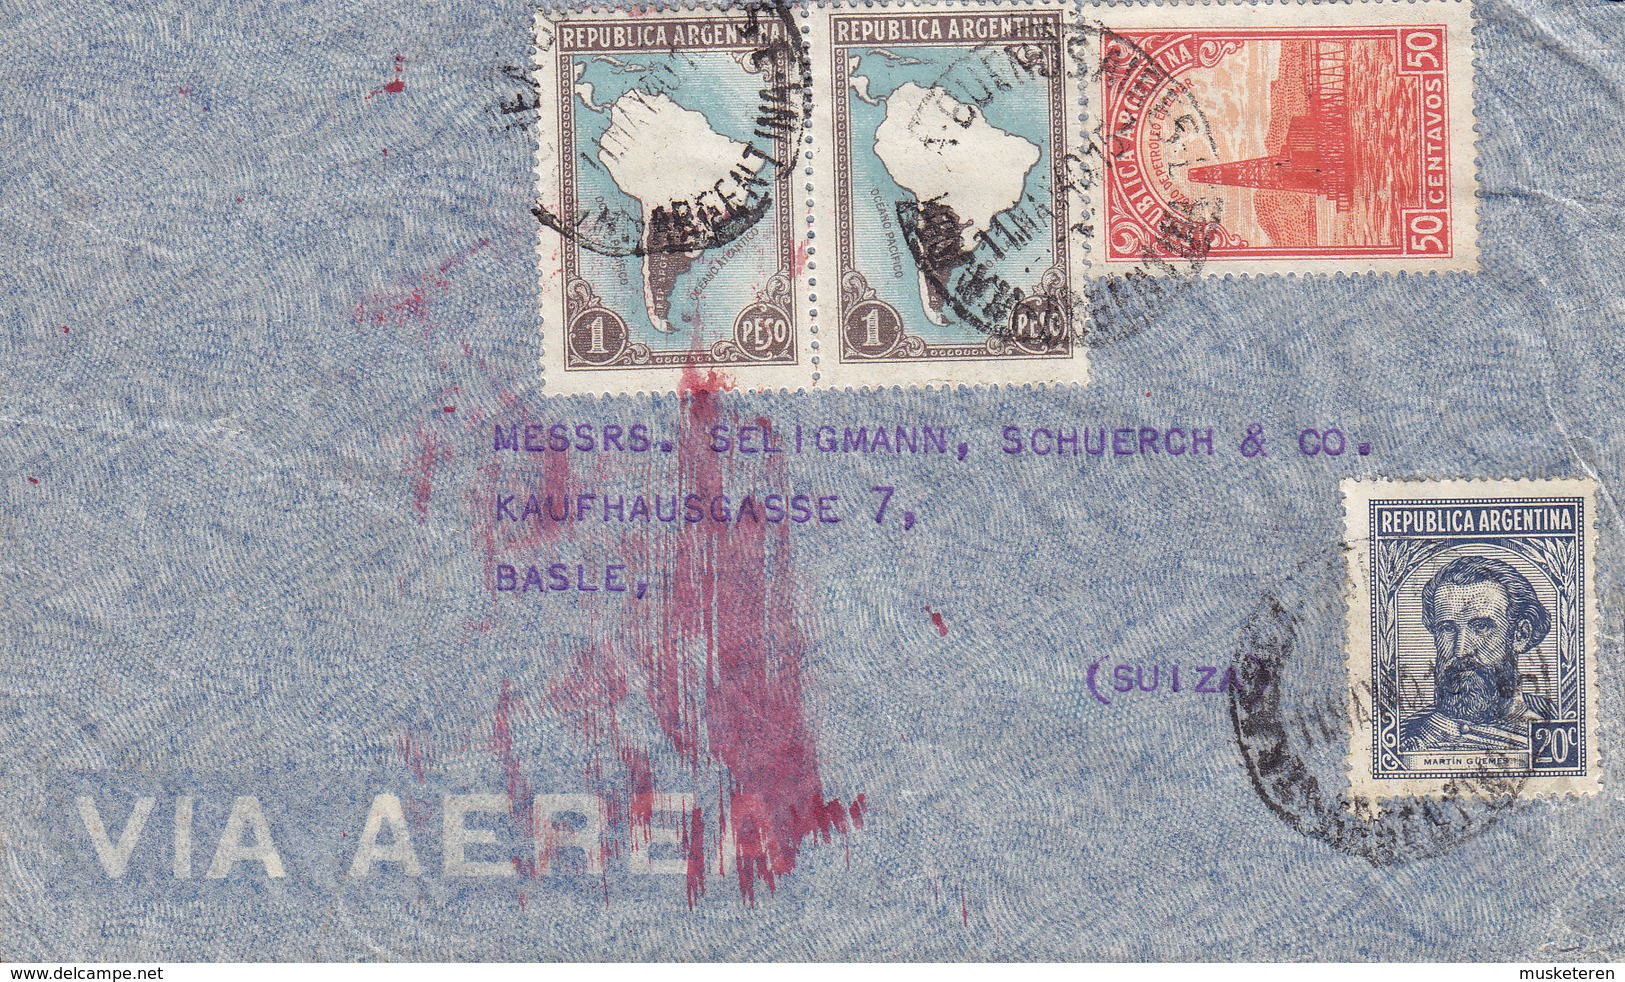 Argentina Via Aerea SHAW, STRUPP & Cia, BUENOS AIRES 1940 Cover Brief BASEL Switzerland (RED) Zensur Censor Markings - Cartas & Documentos